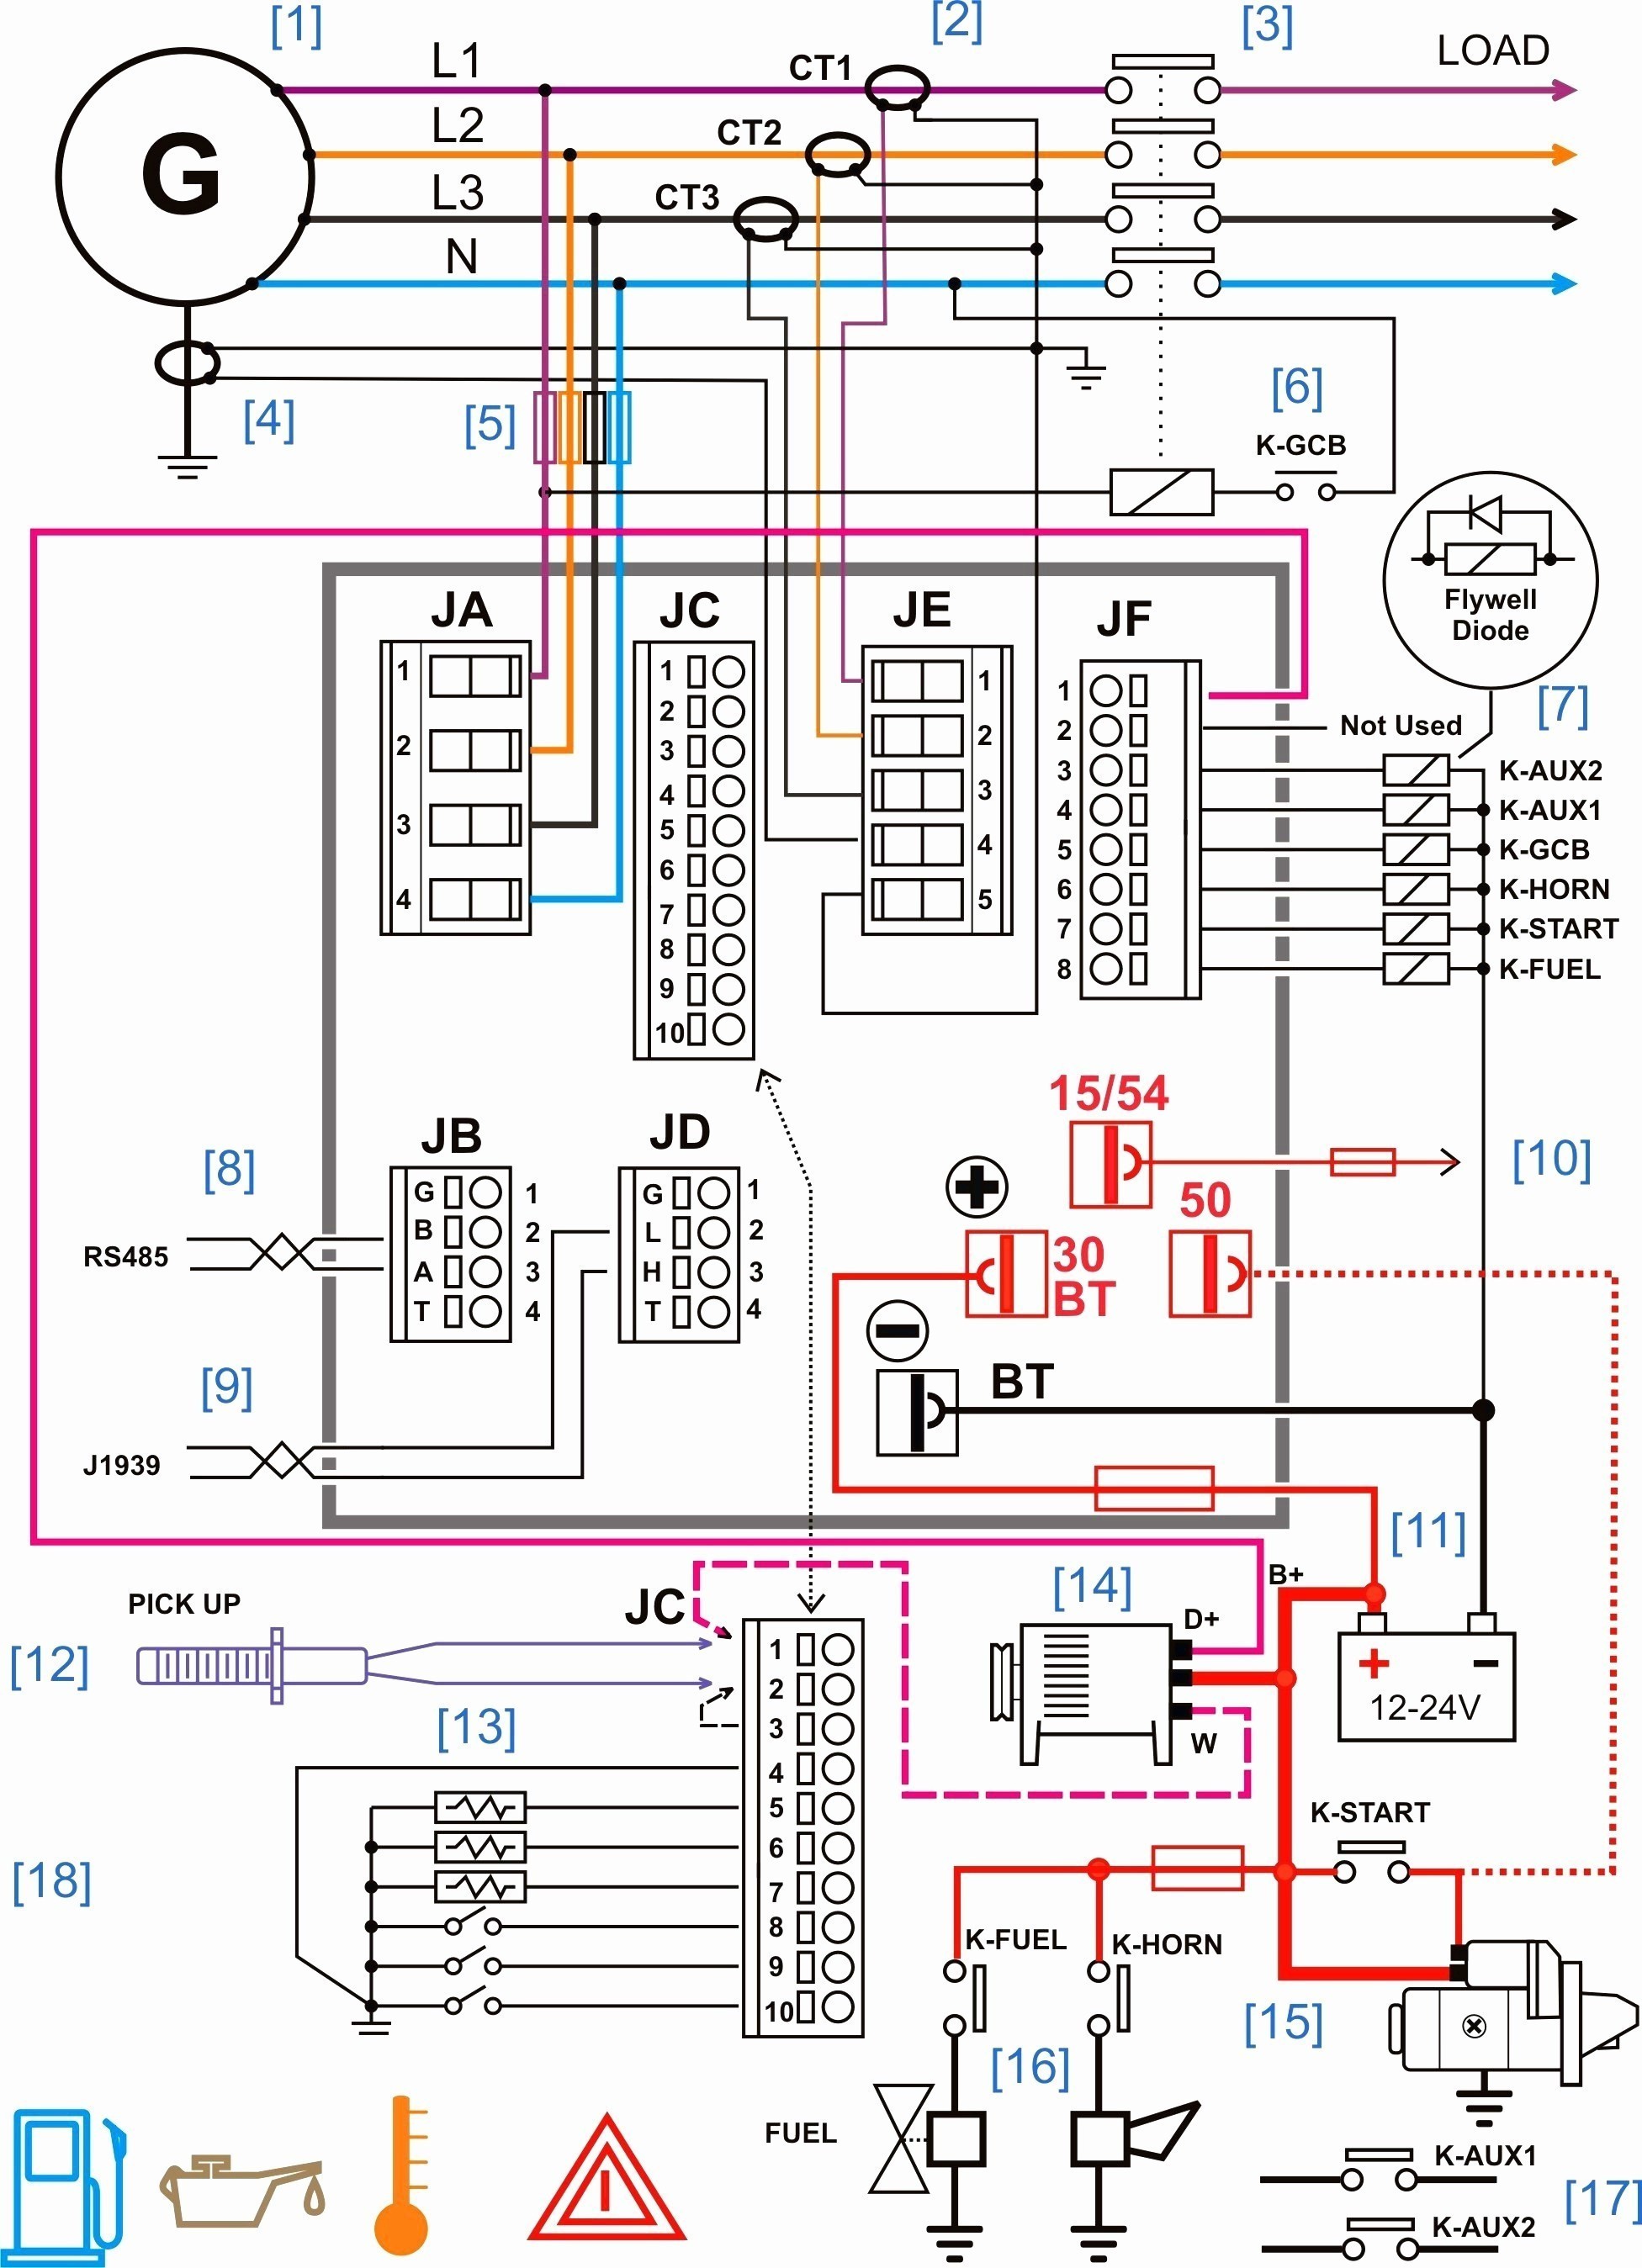 Wiring Diagram for Car Radio Wiring Diagram Book Best Wiring Harness Diagram Book Car Stereo Of Wiring Diagram for Car Radio